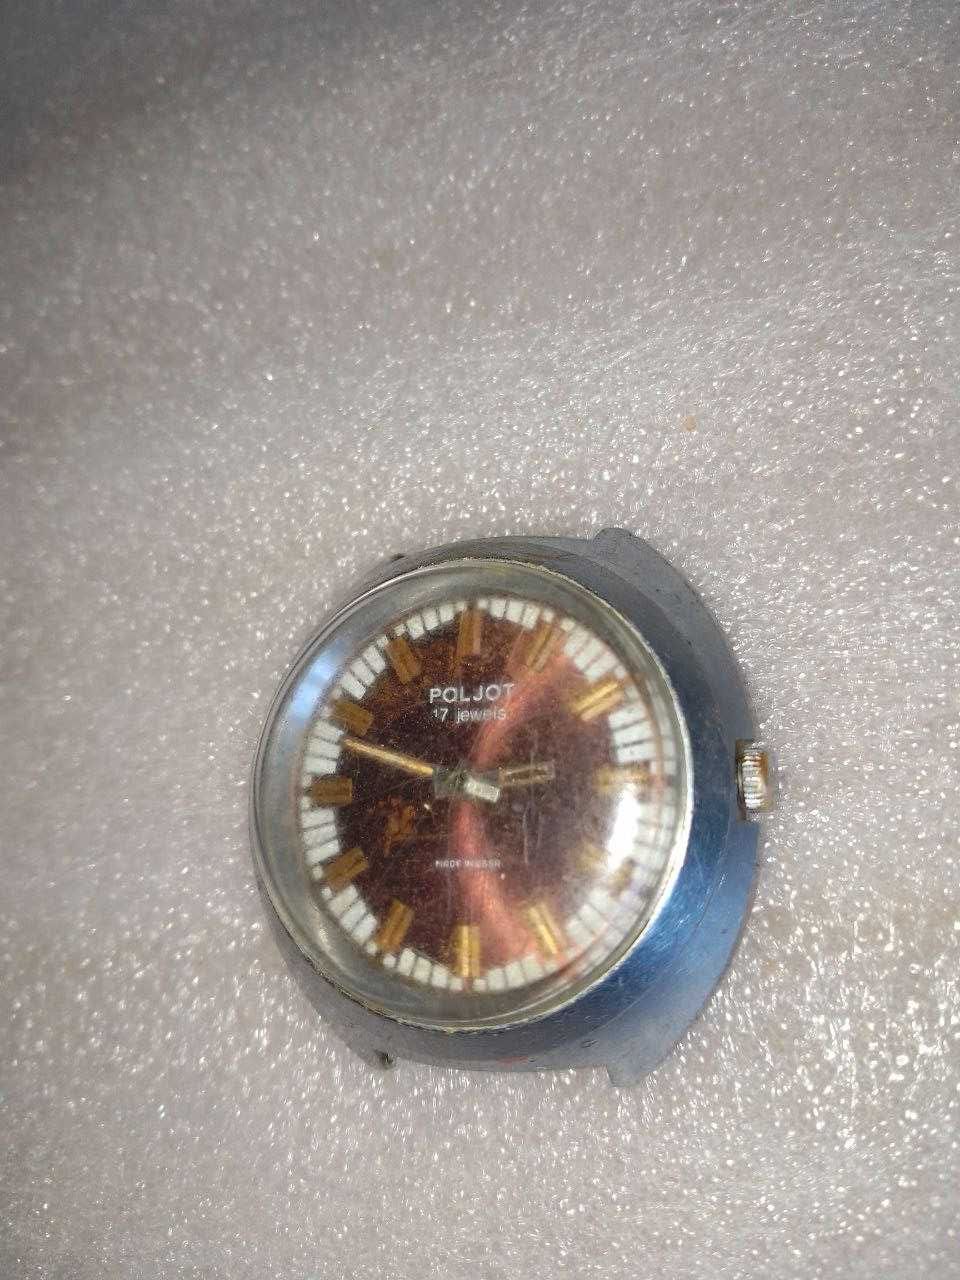 Часы Poljot, 17 Jewels (USSR)